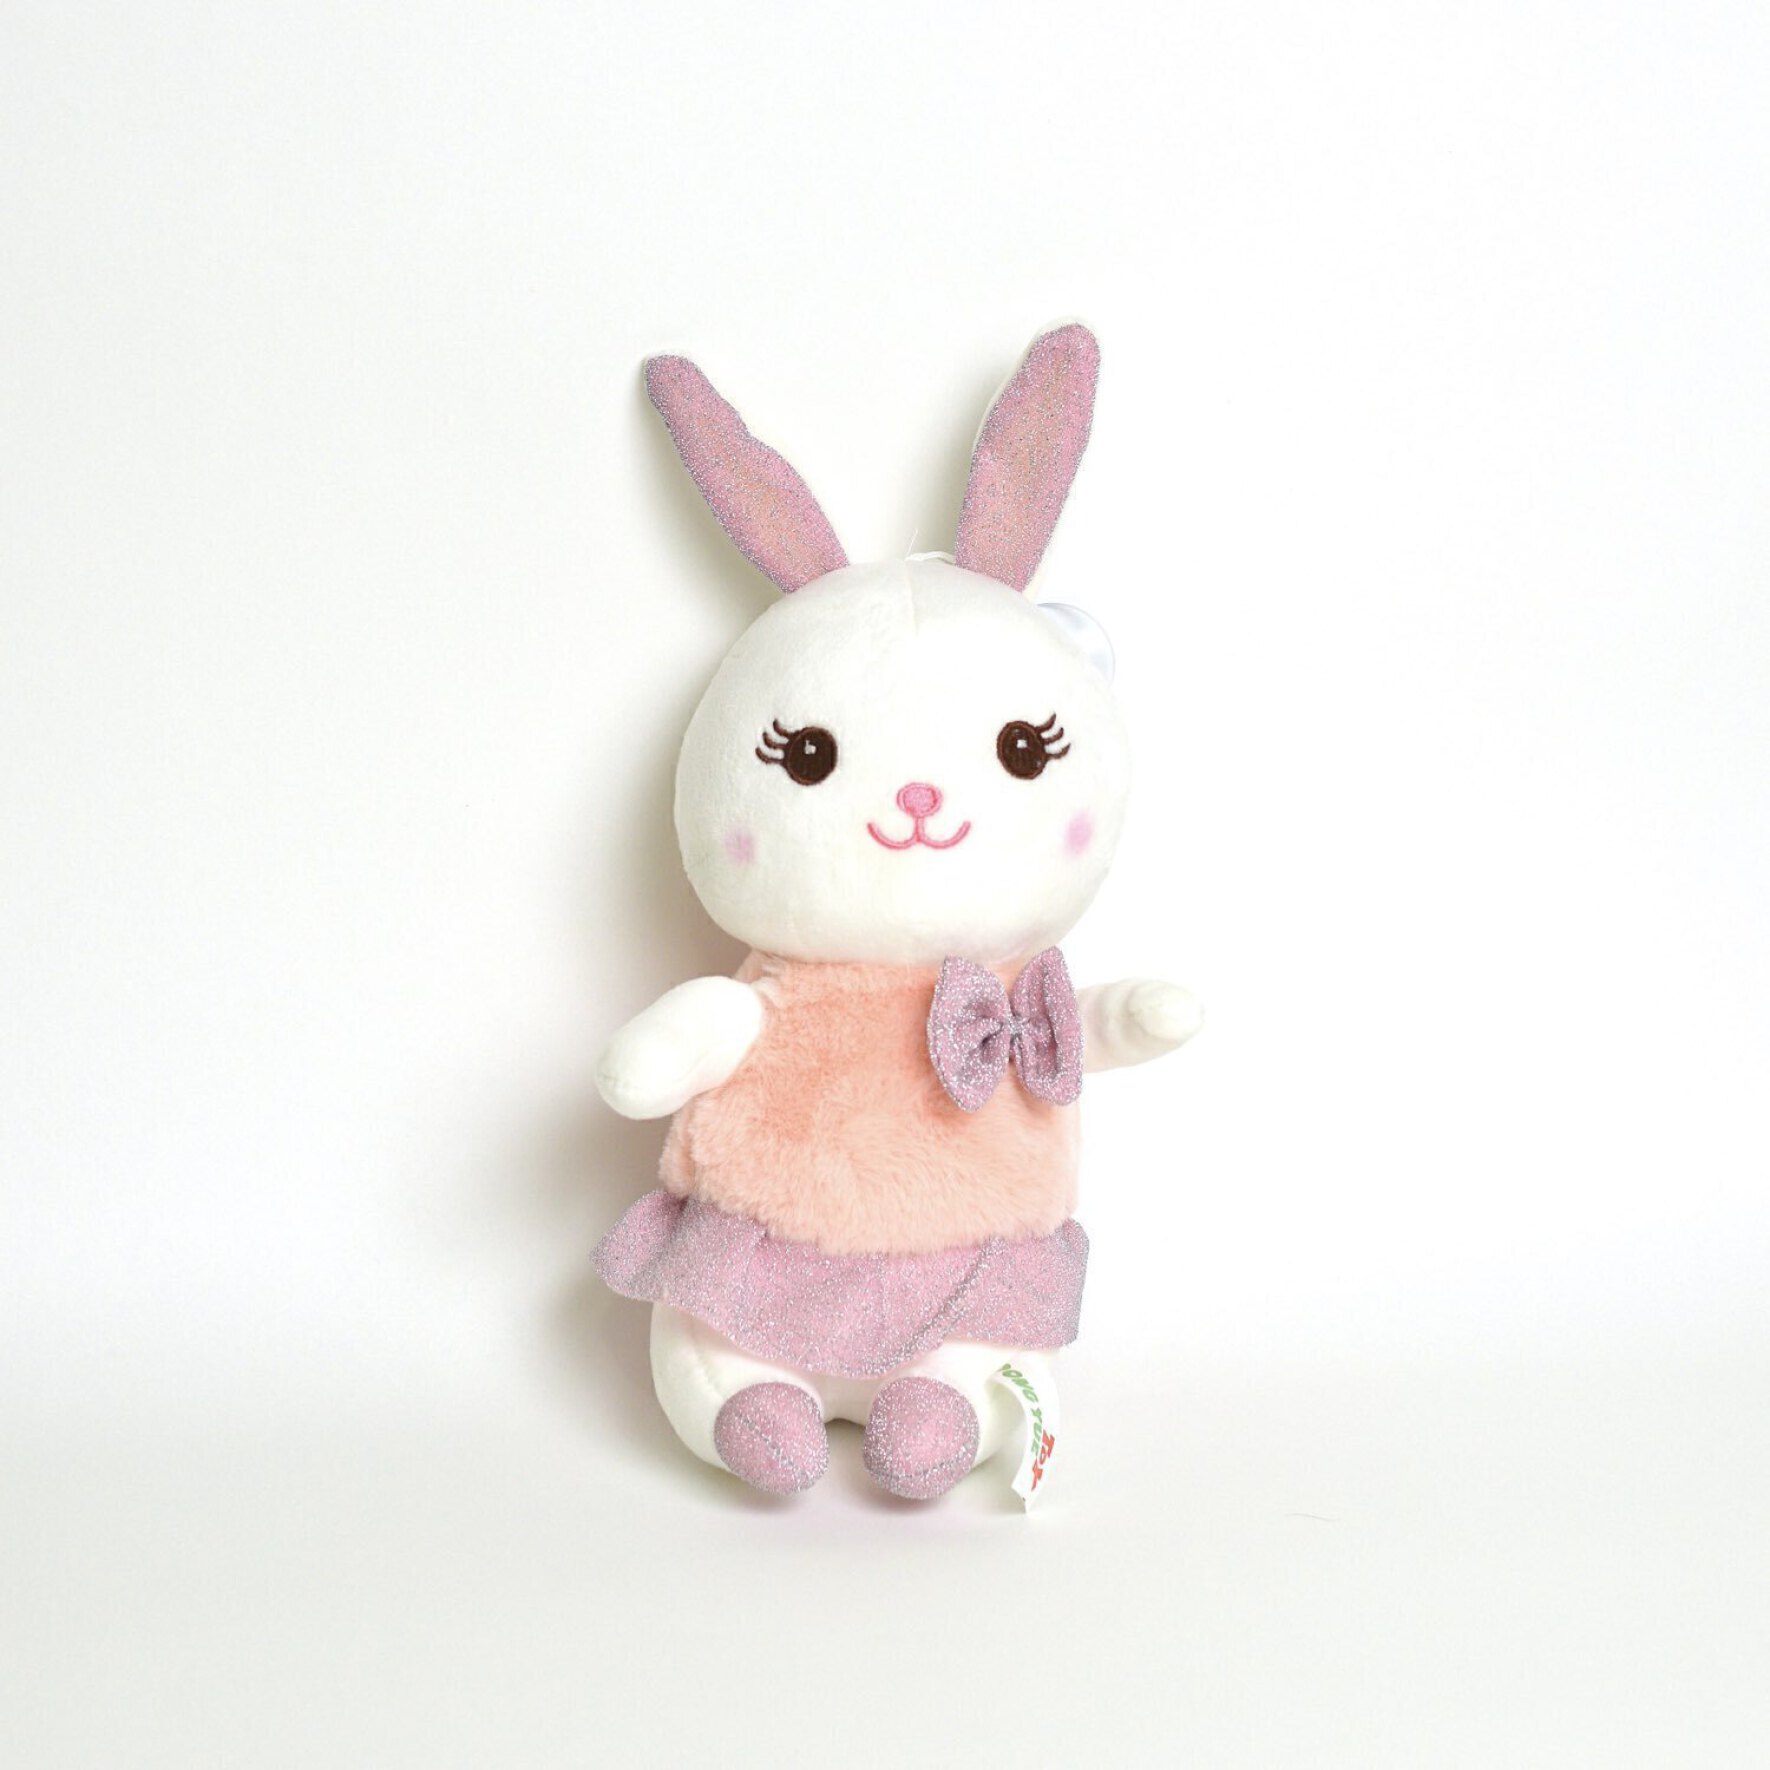  عروسک پولیشی خرگوش با پاپیون 